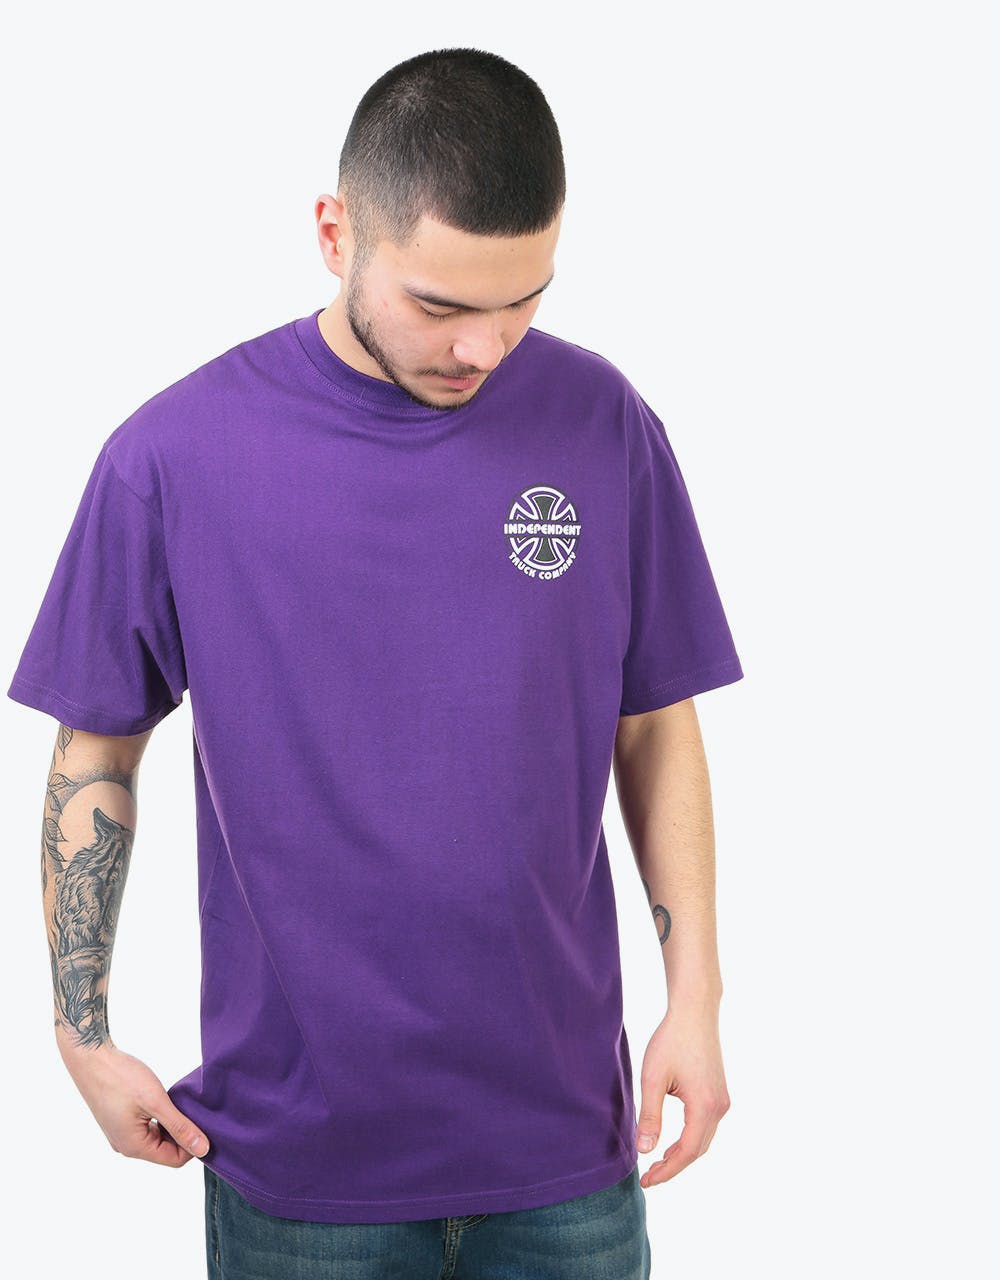 Independent ITC Bauhaus T-Shirt - Deep Purple